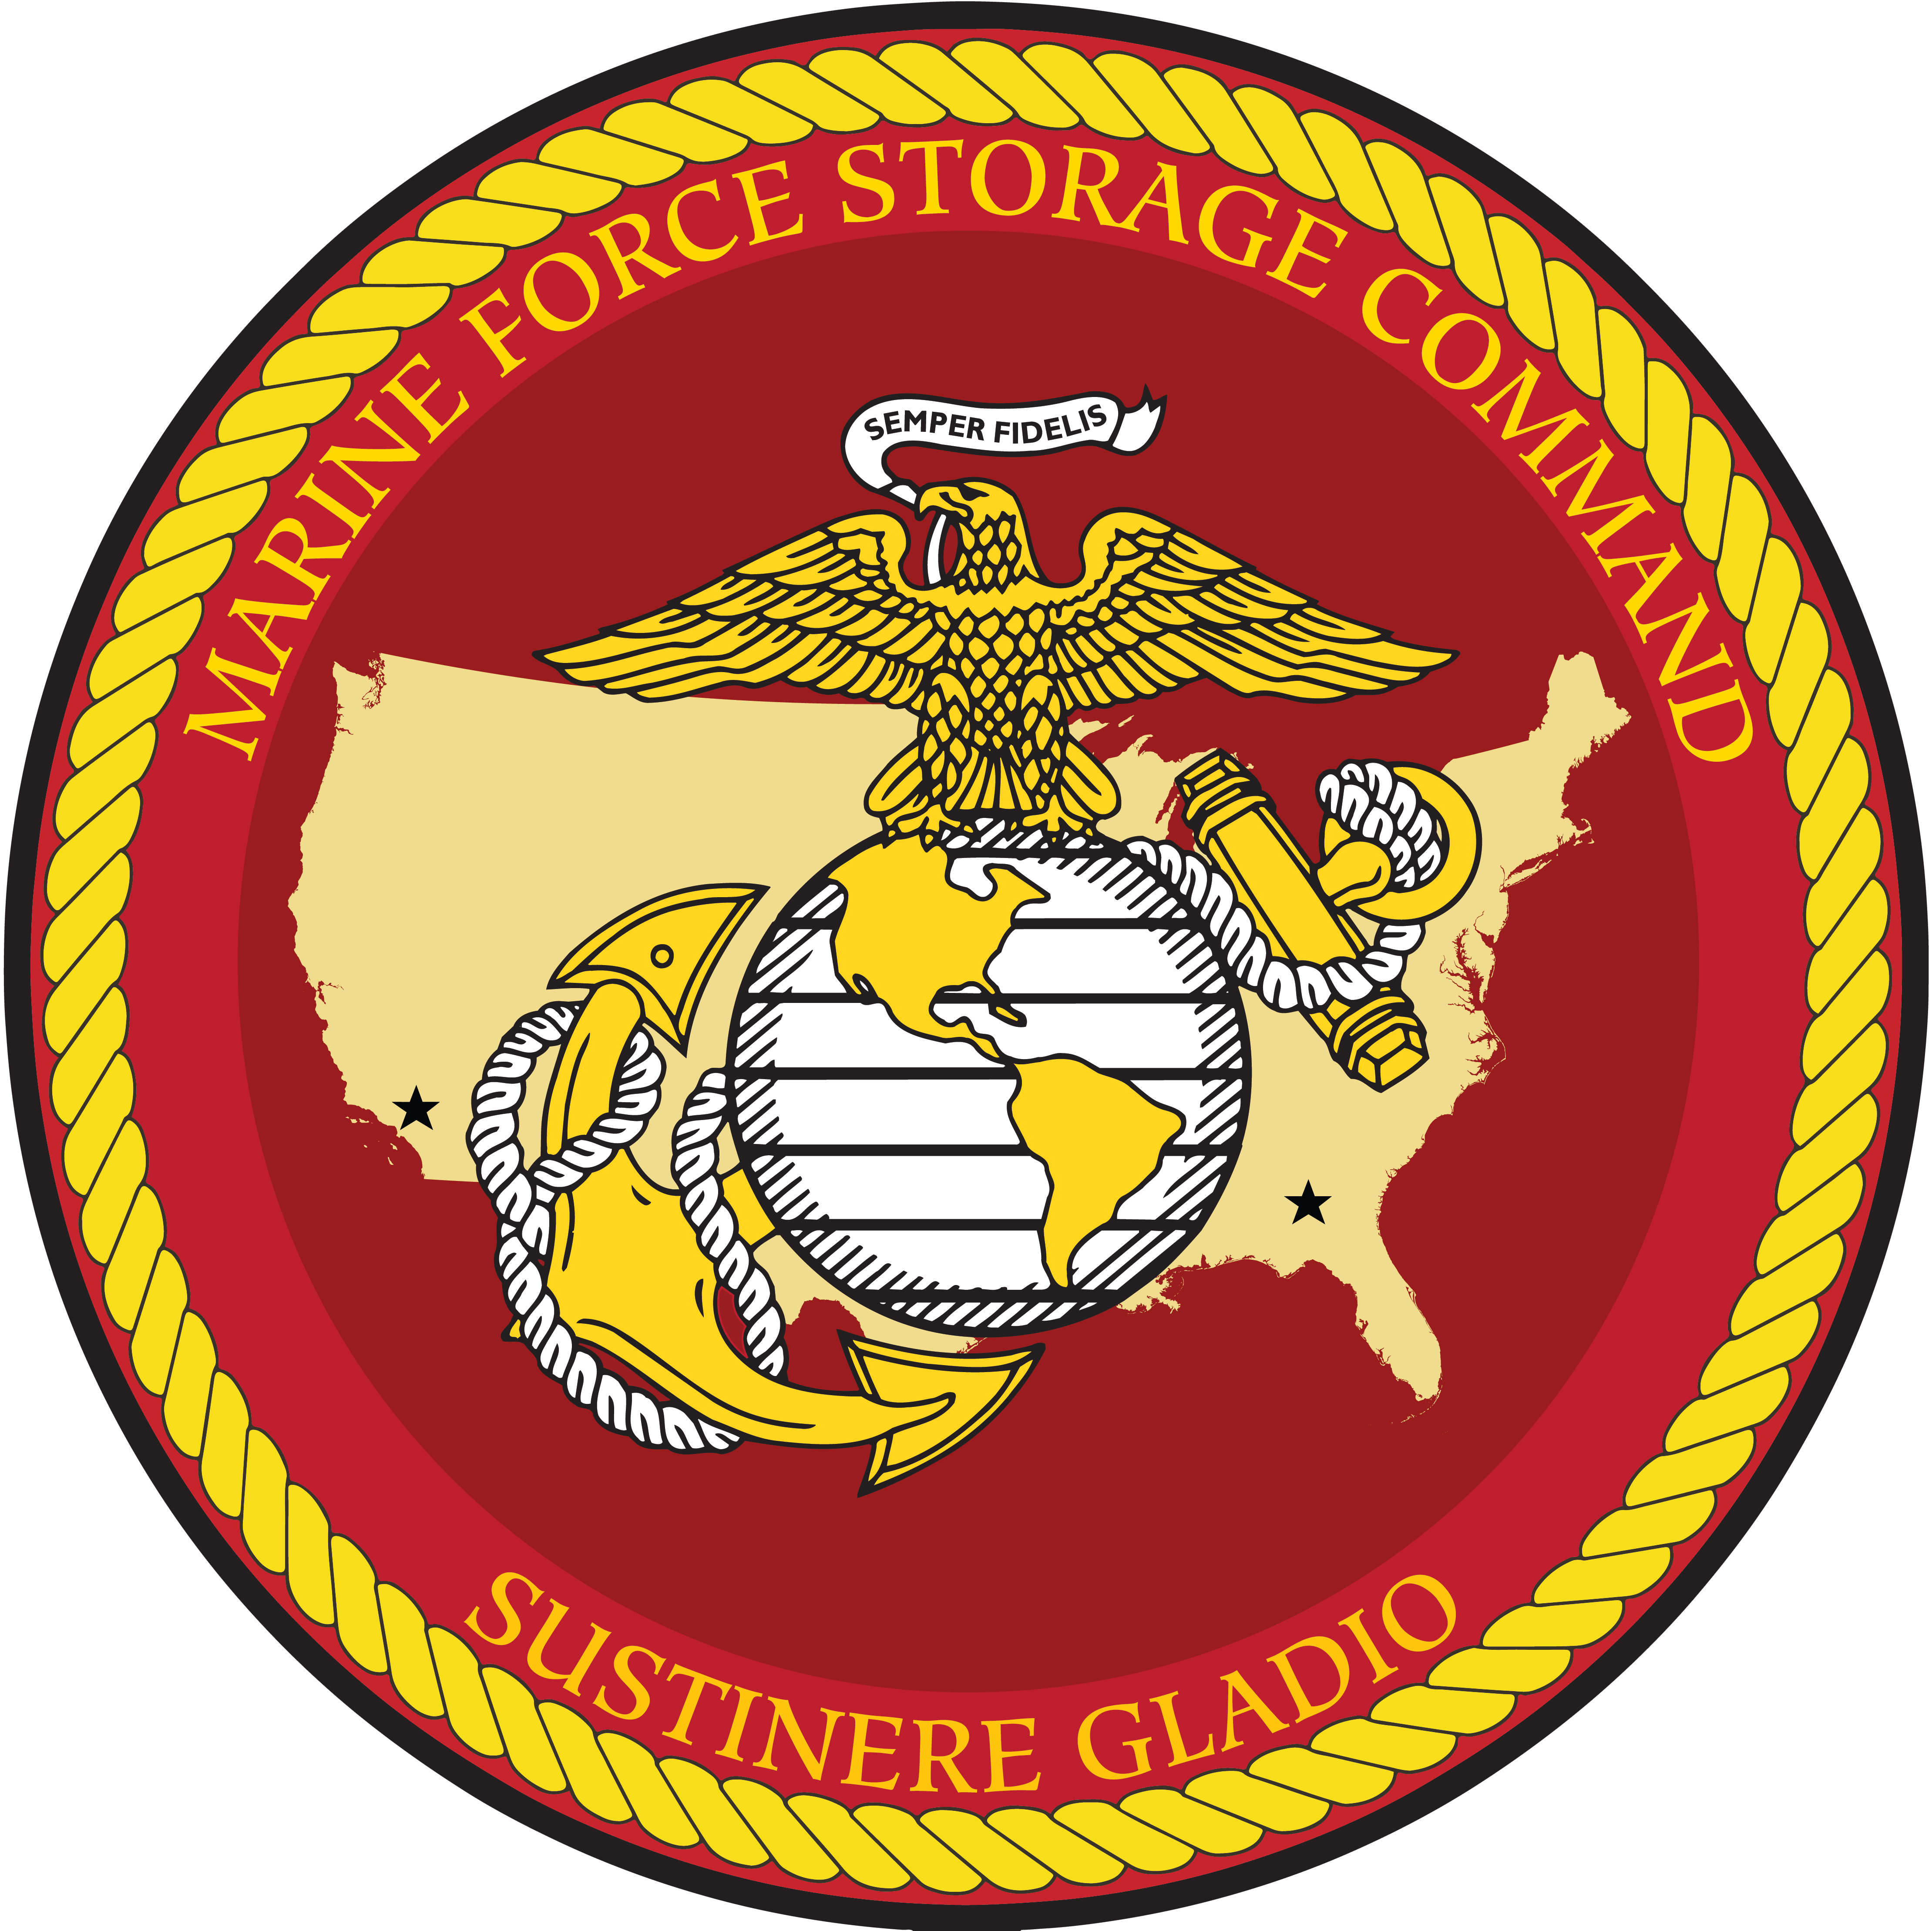 Marine Corps Logistics Command